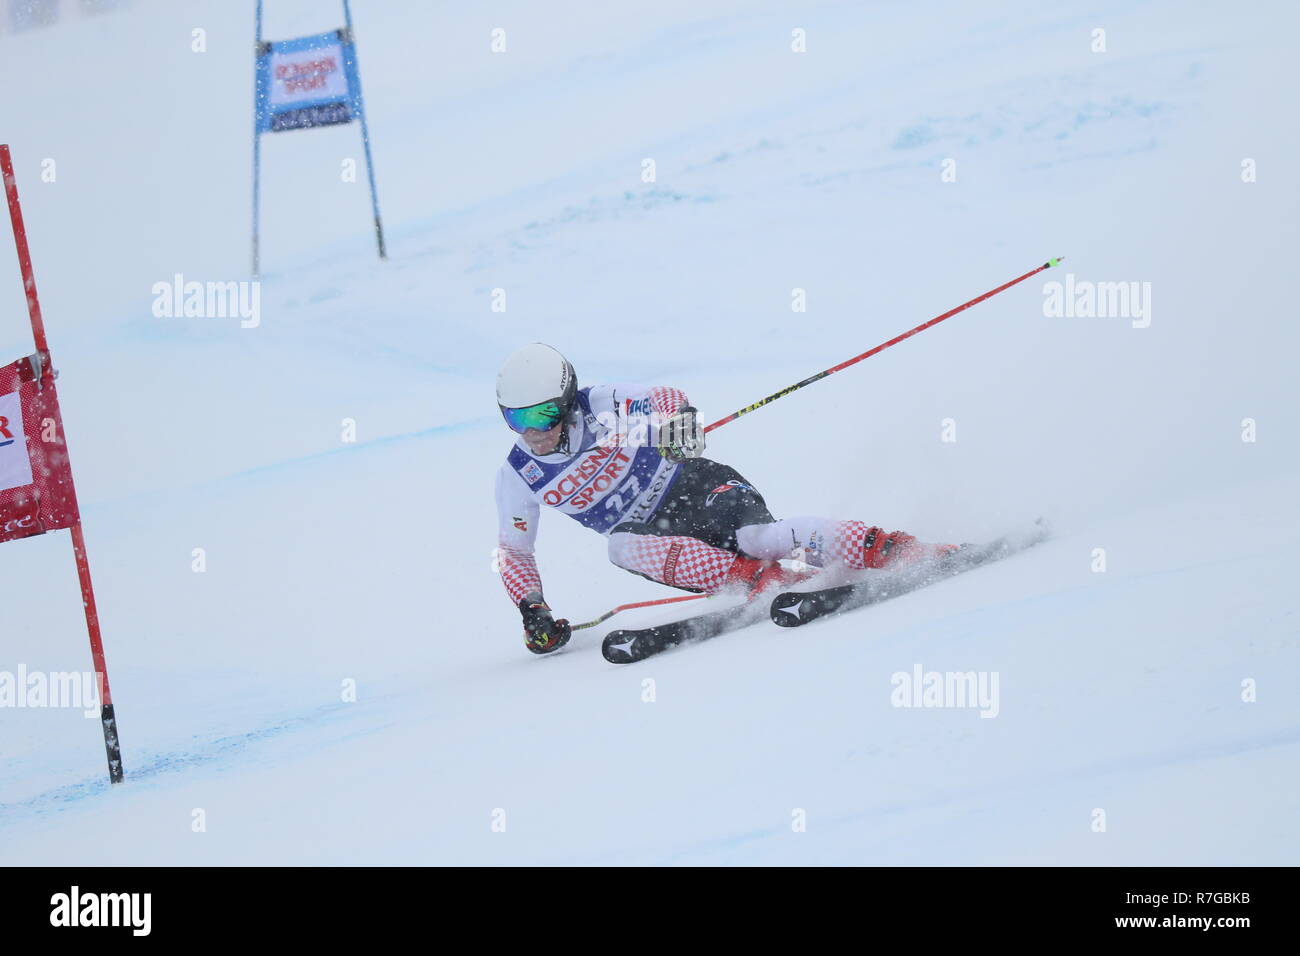 08 Dec. 2018 Val d'Isère, France. Filip Zubcic alpine skier from Croatia competing in men's Giant Slalom Audi FIS Alpine Ski World Cup 2019 Stock Photo